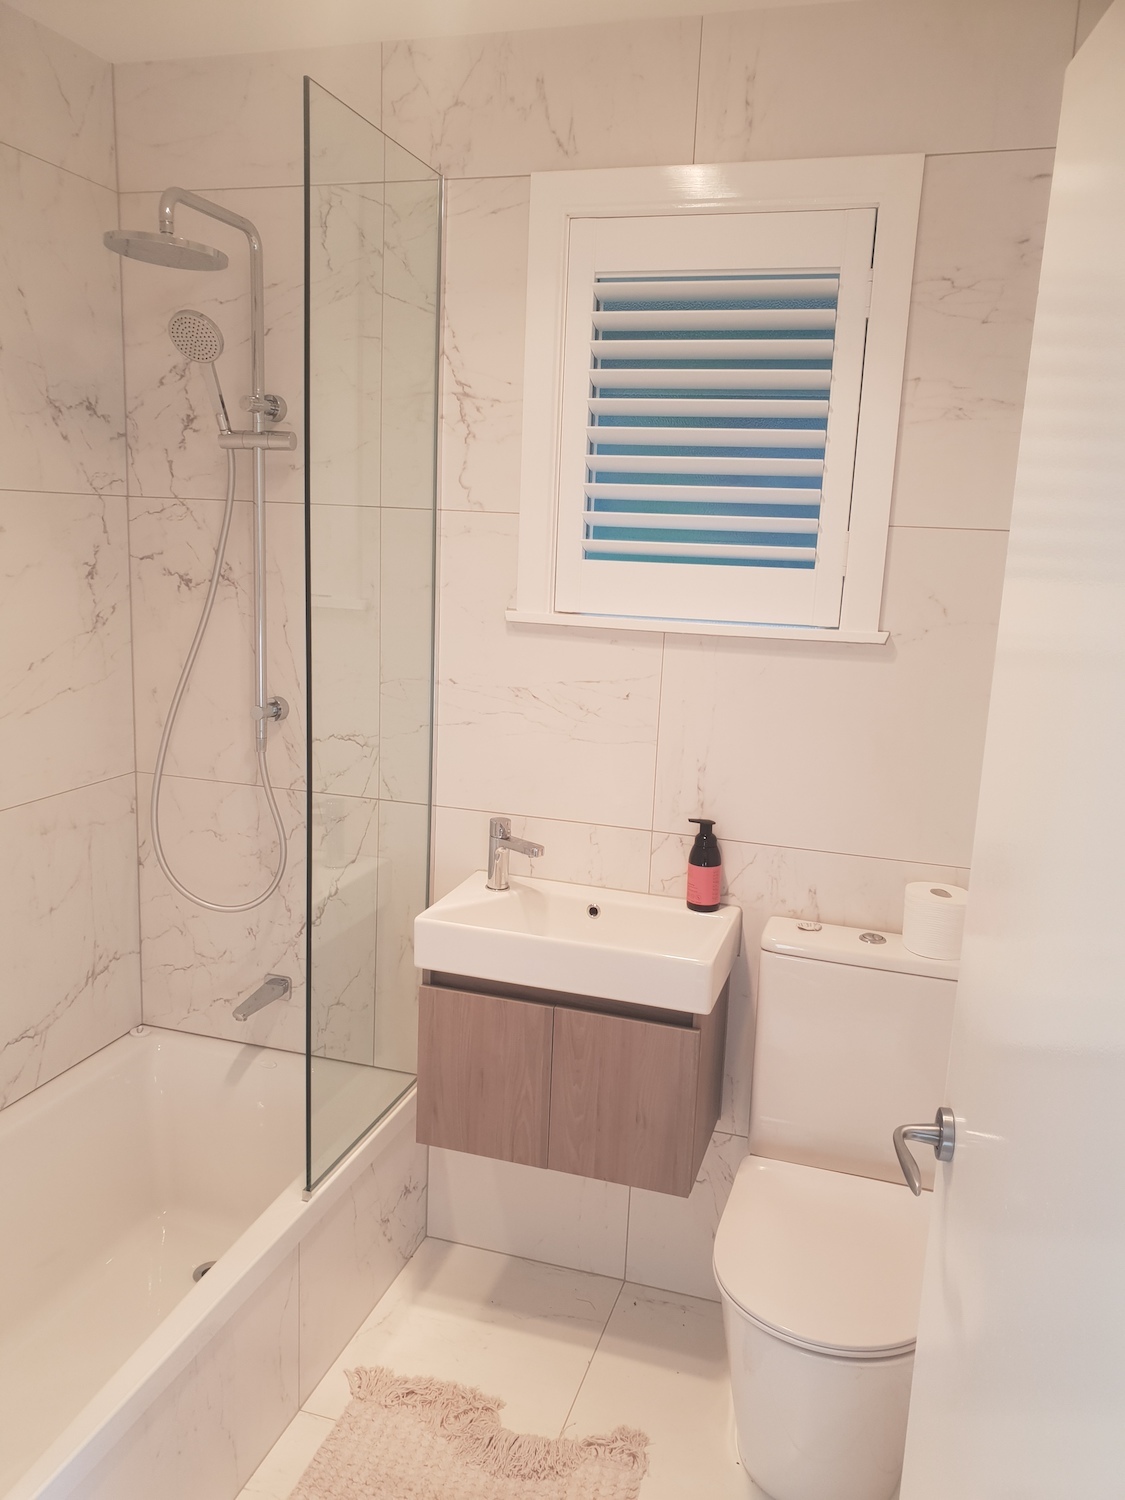 Bath-shower, vanity & toilet